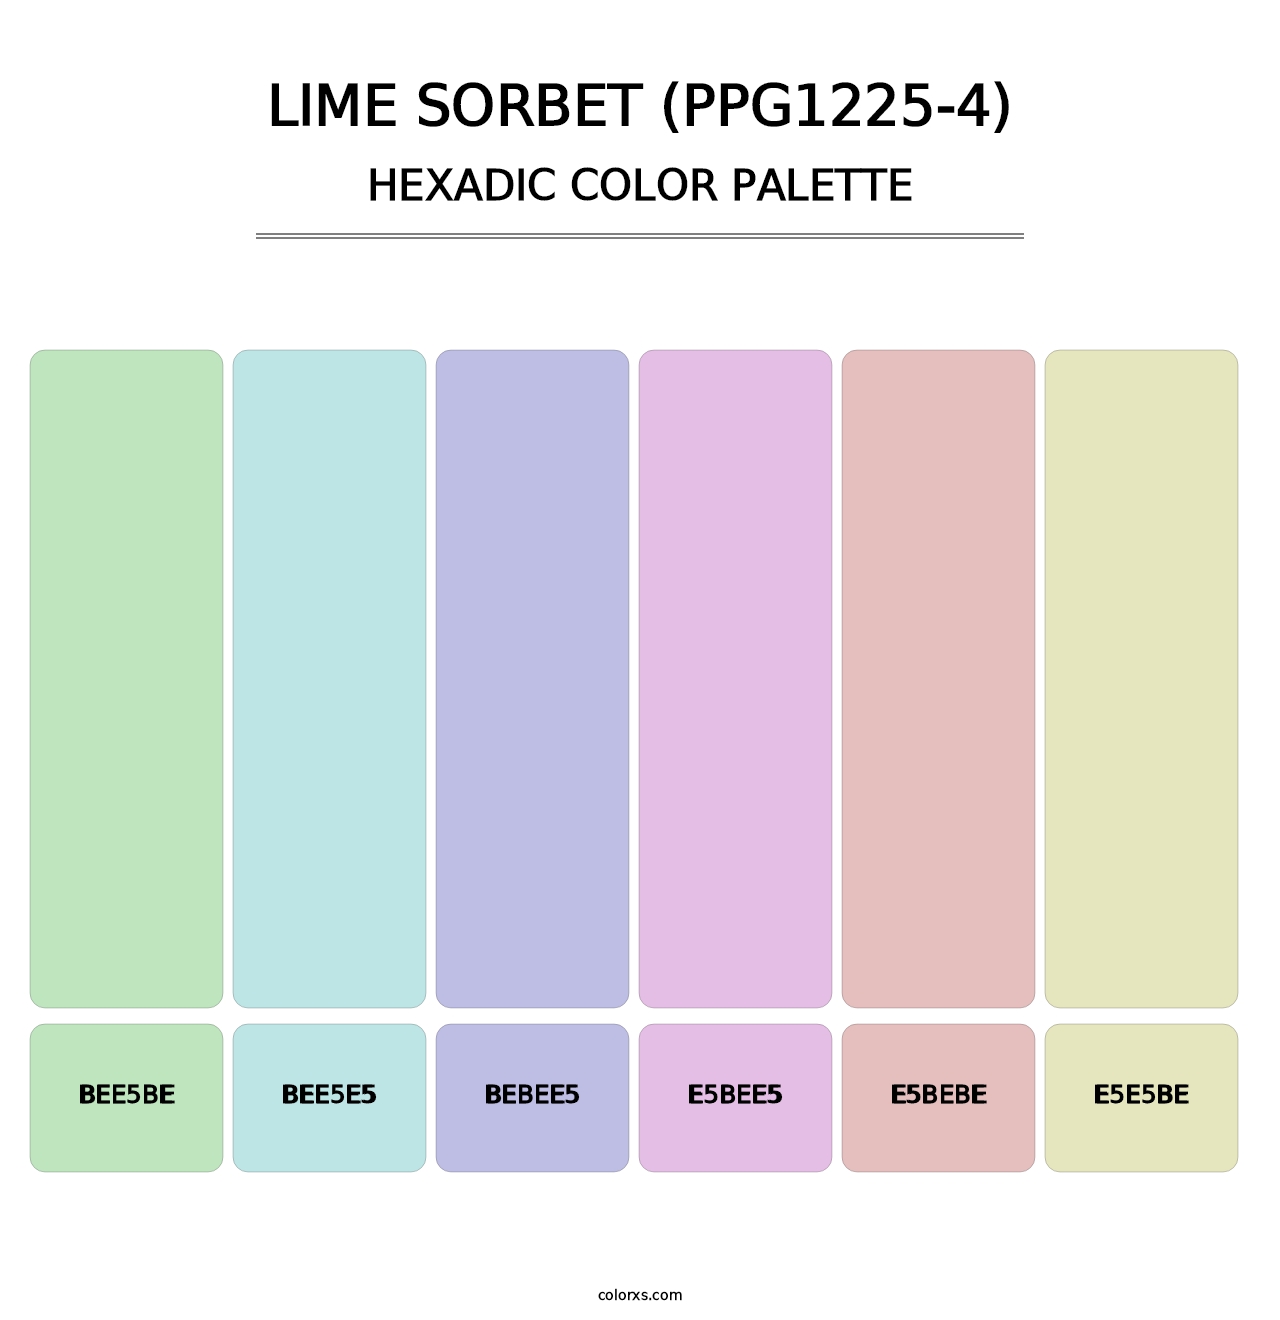 Lime Sorbet (PPG1225-4) - Hexadic Color Palette